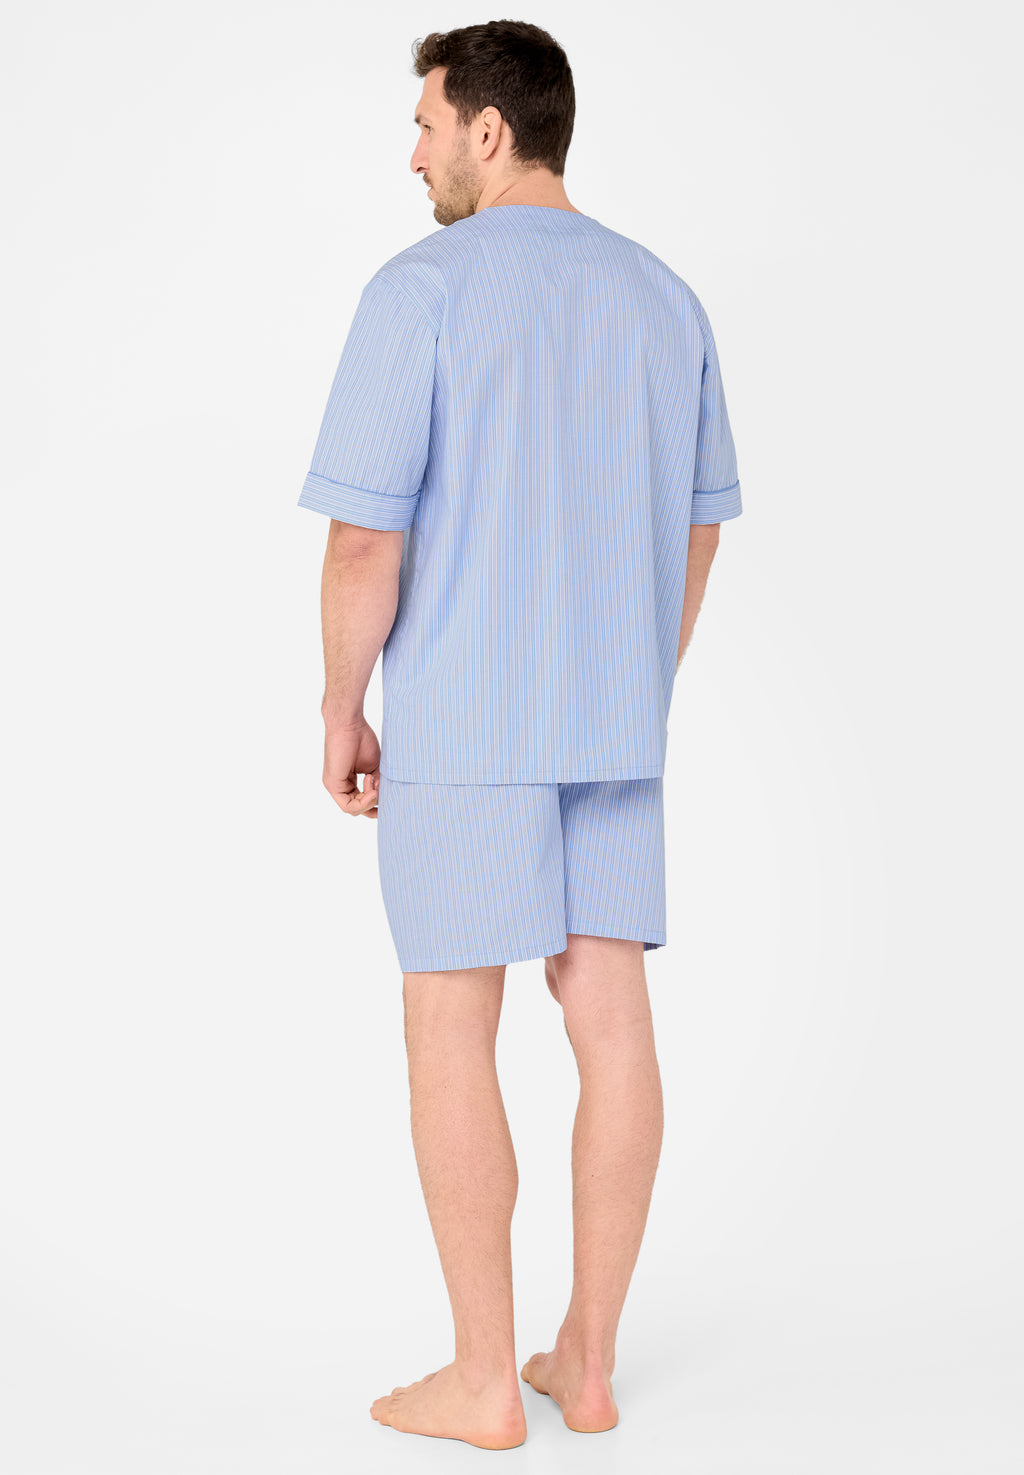 Buy Short Pajamas for Men Summer Fabric